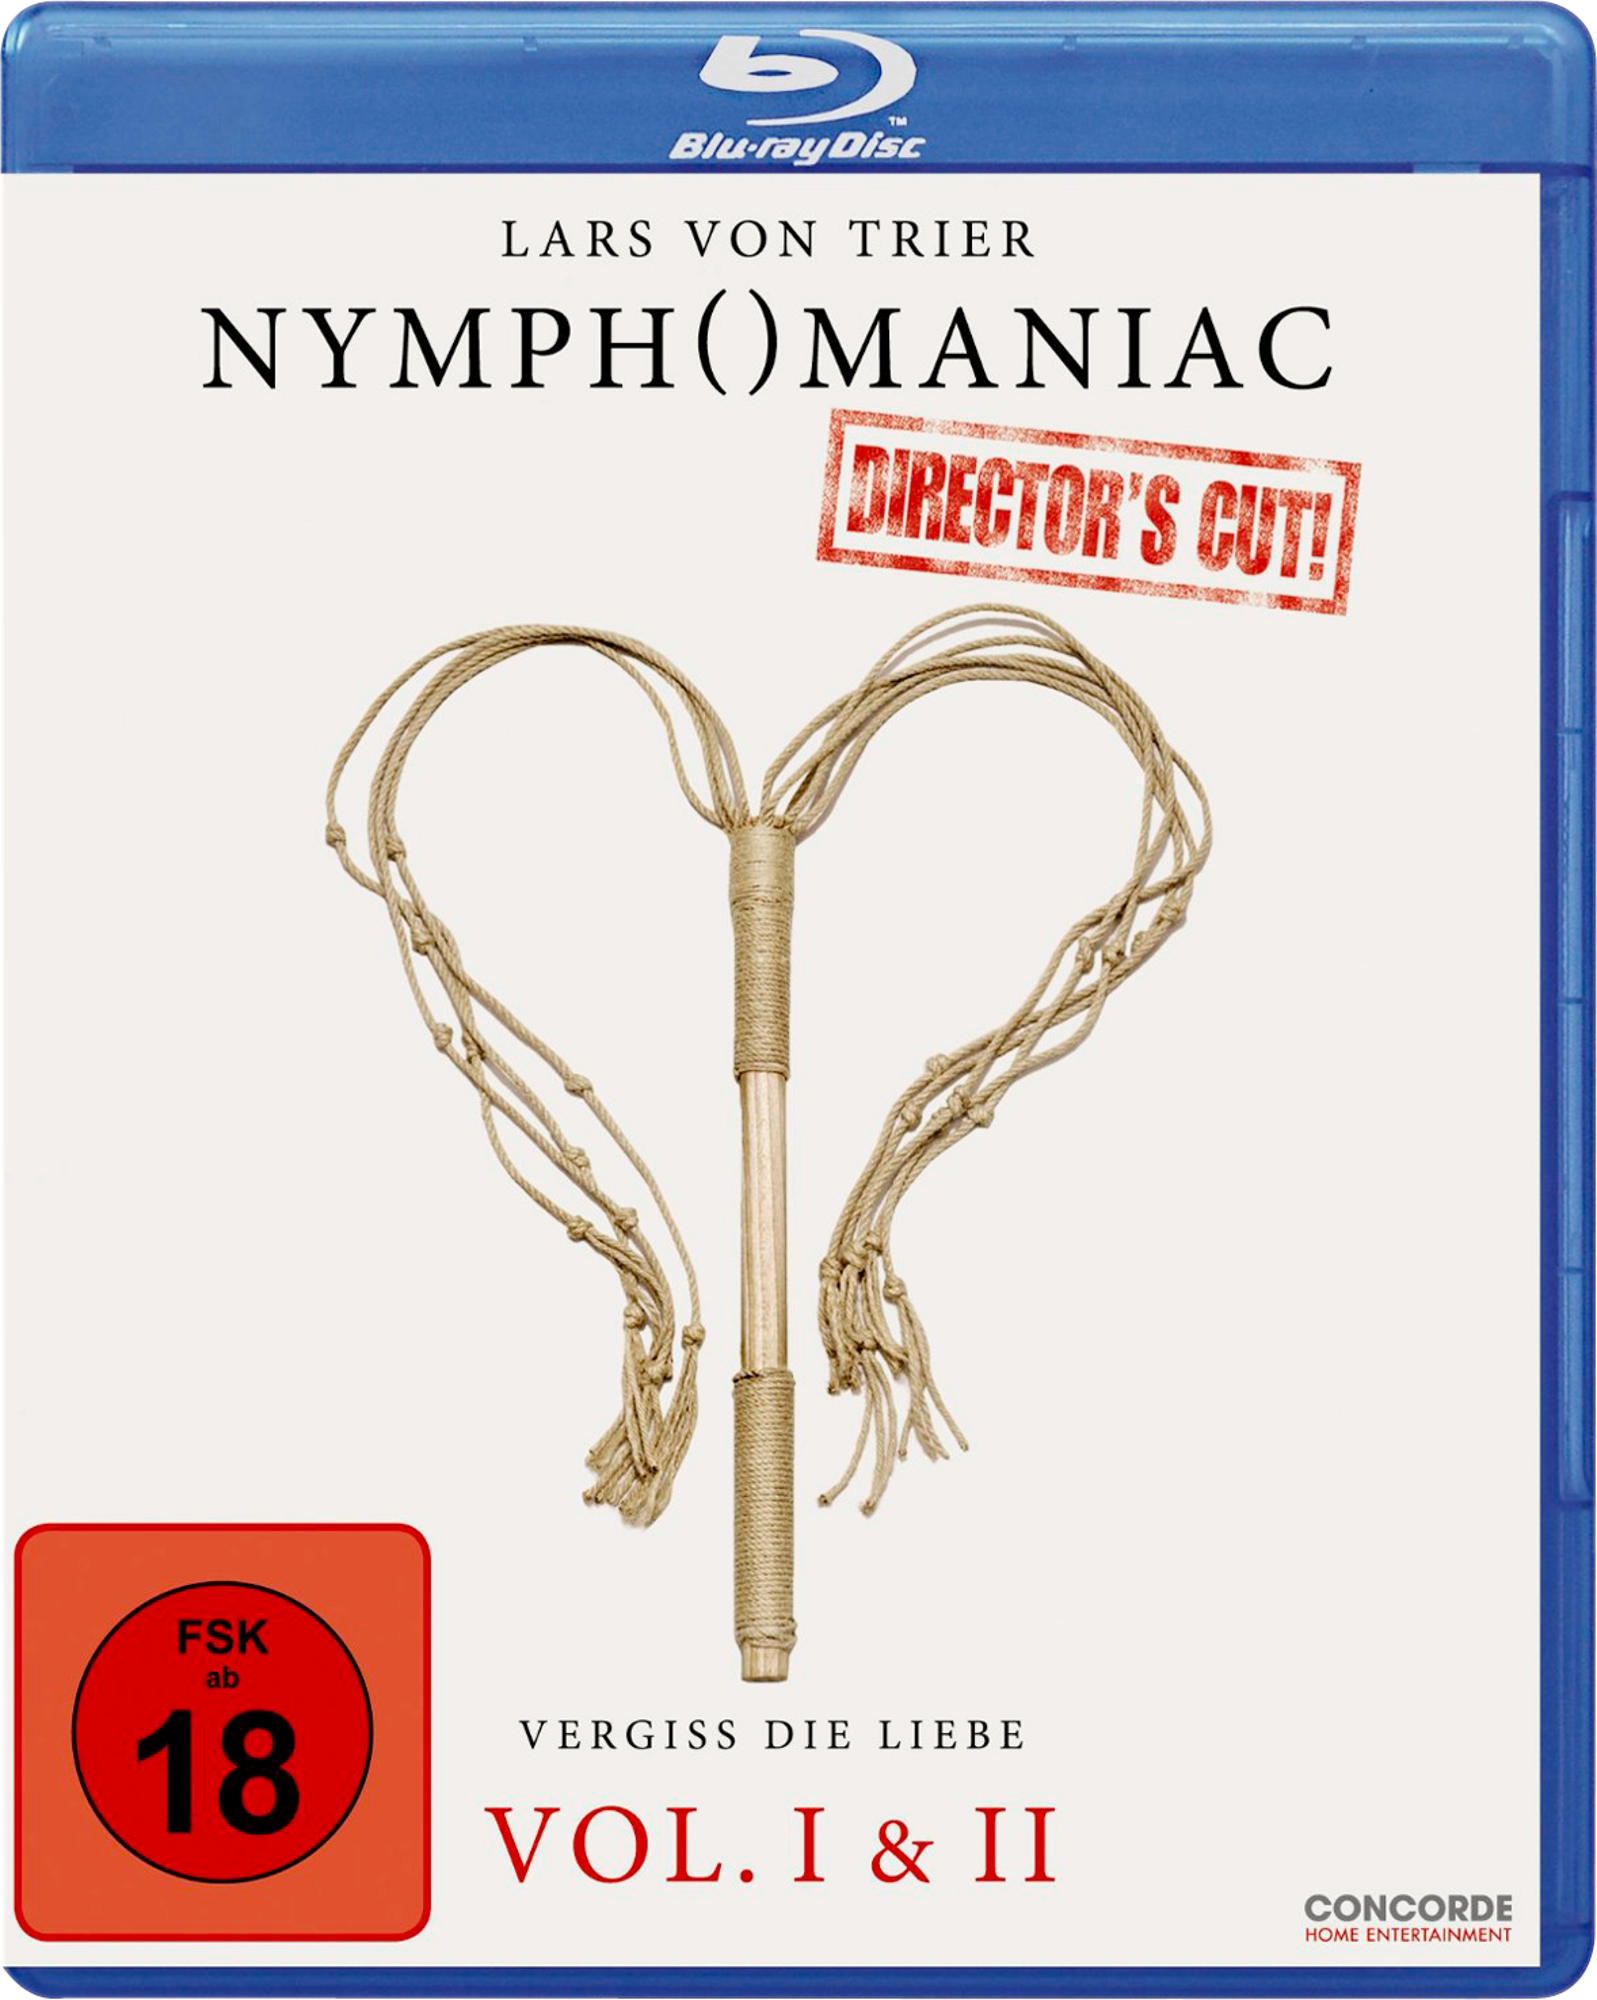 Nymphomaniac Vol. I & II Blu-ray